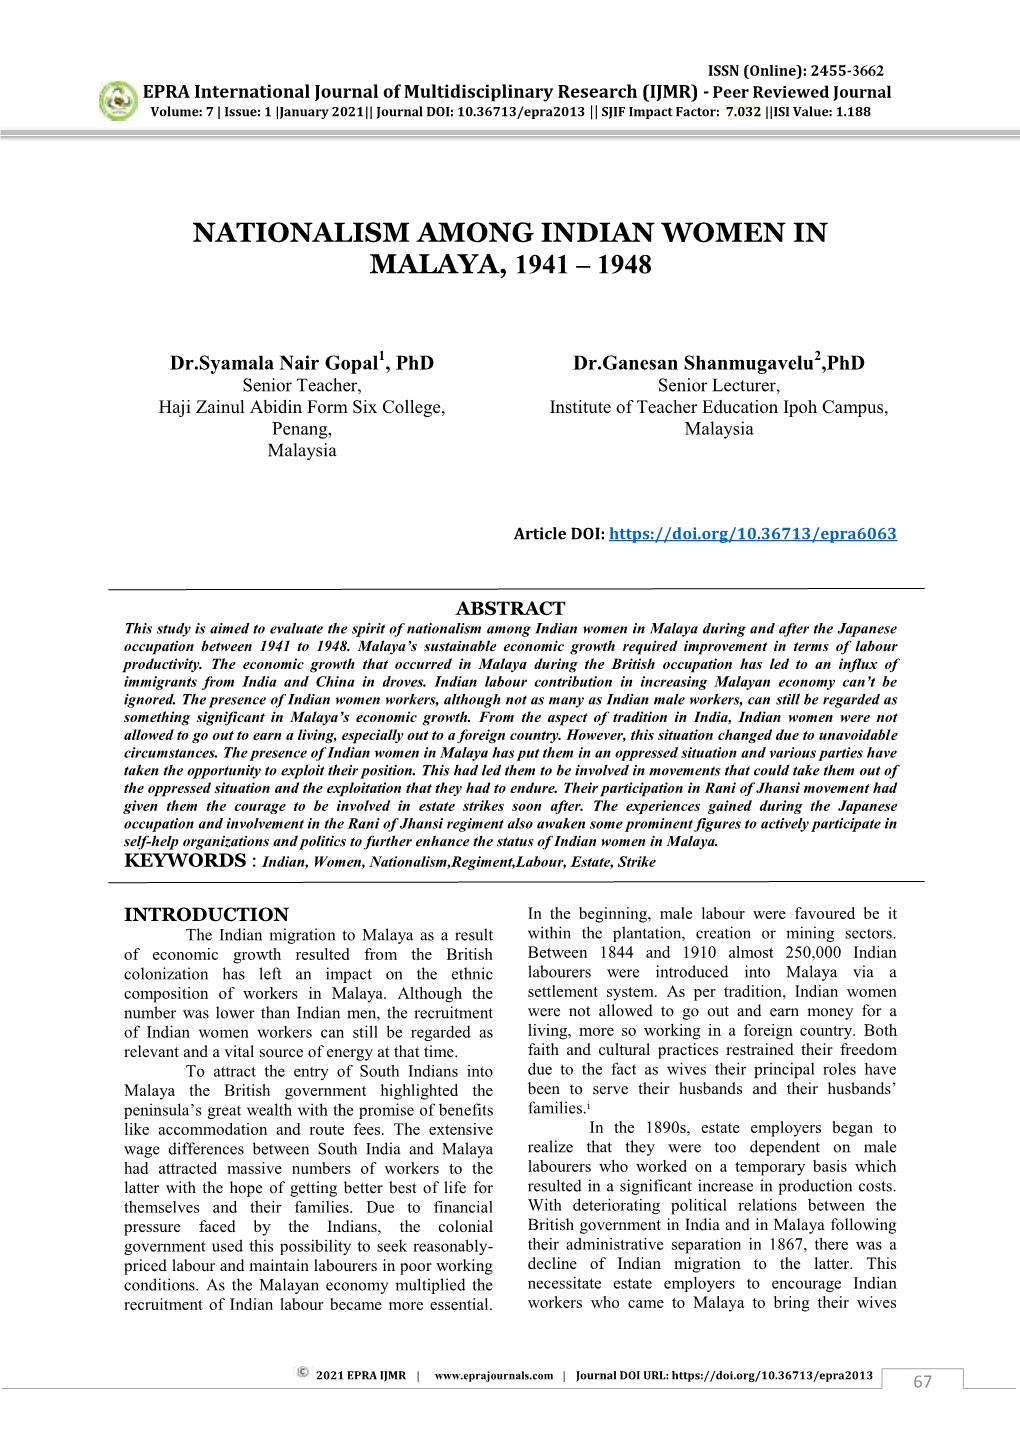 Nationalism Among Indian Women in Malaya, 1941 – 1948